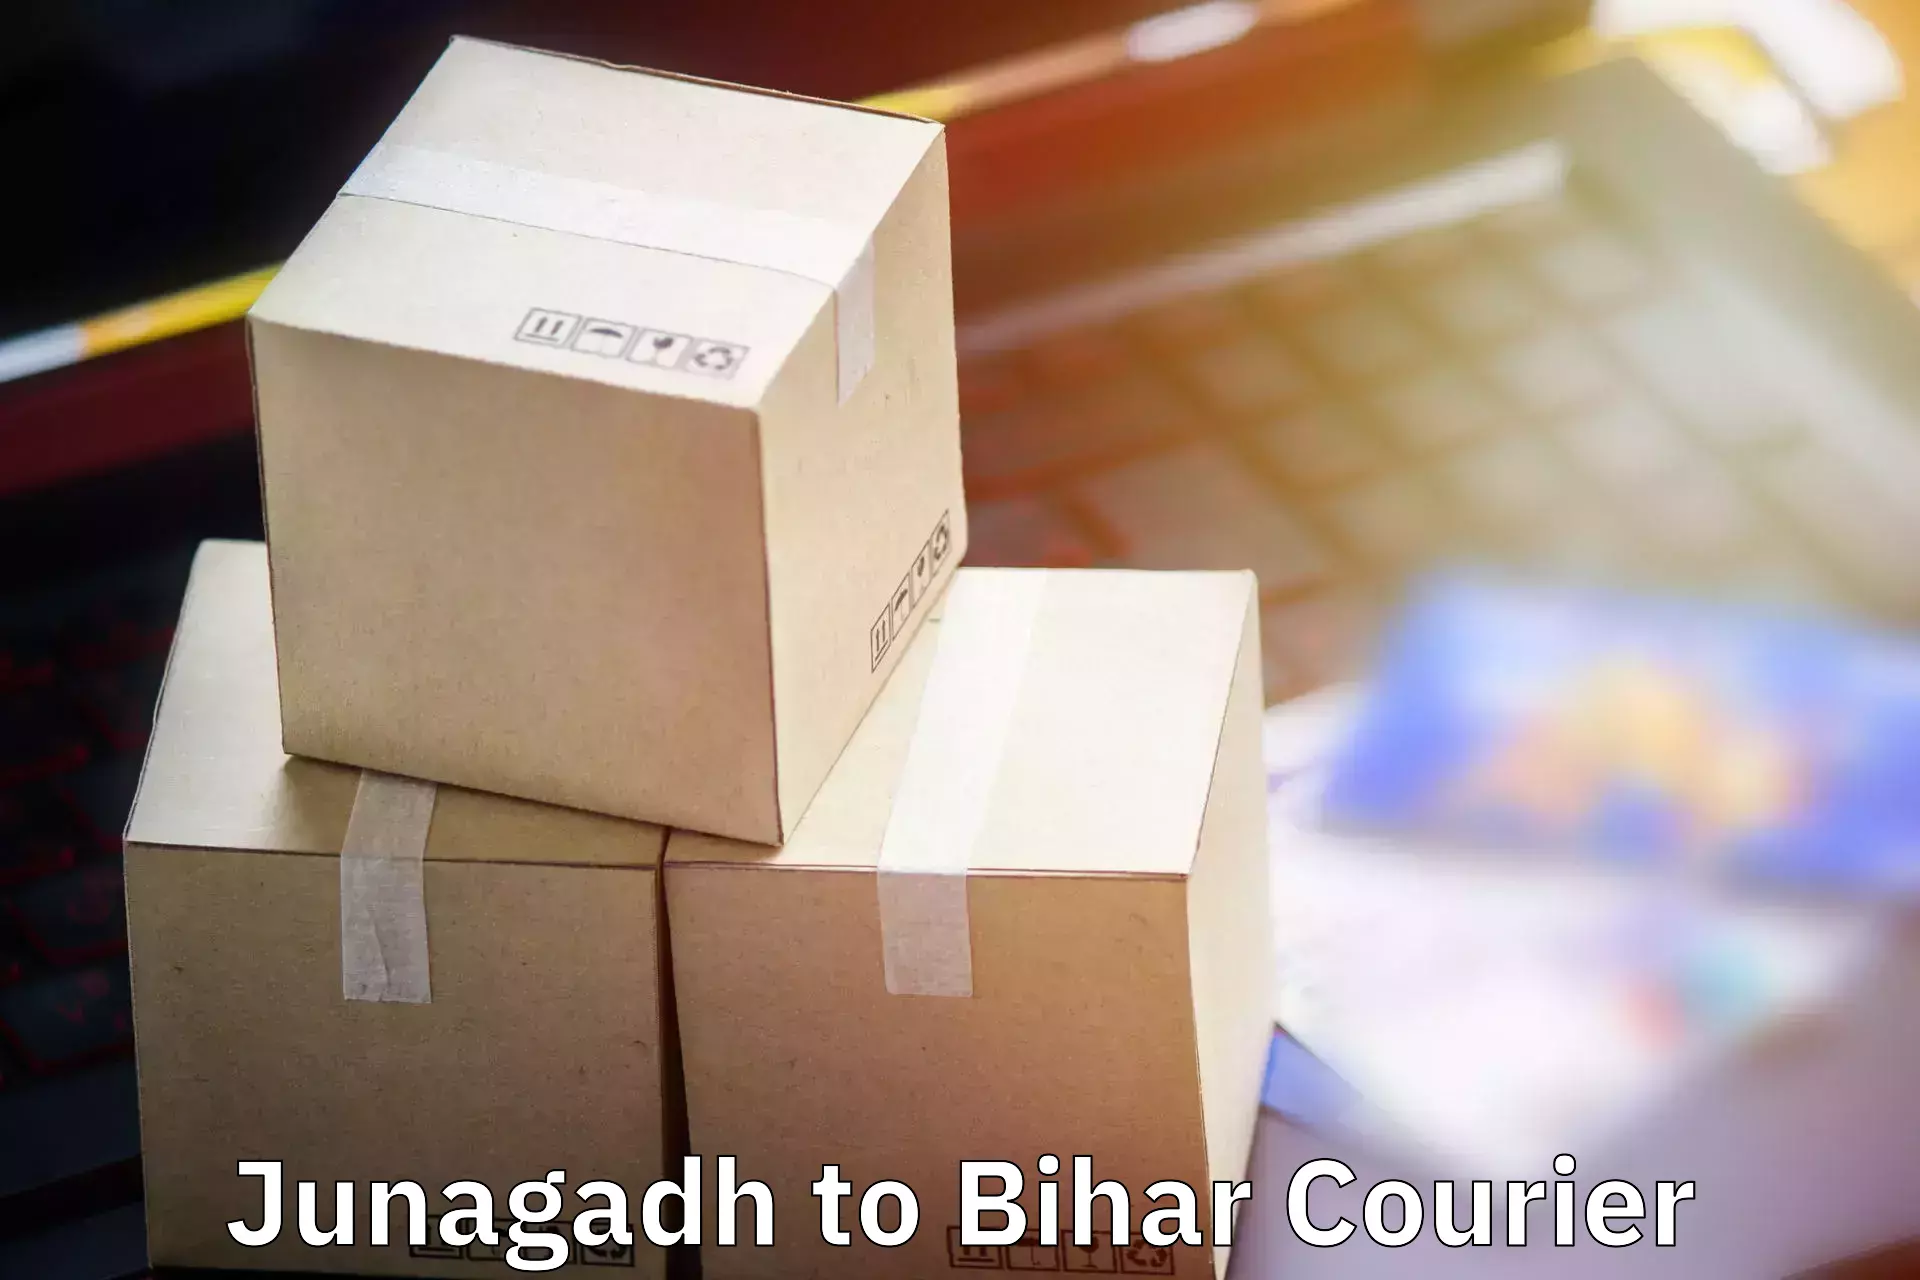 Luggage transport consultancy Junagadh to Barh